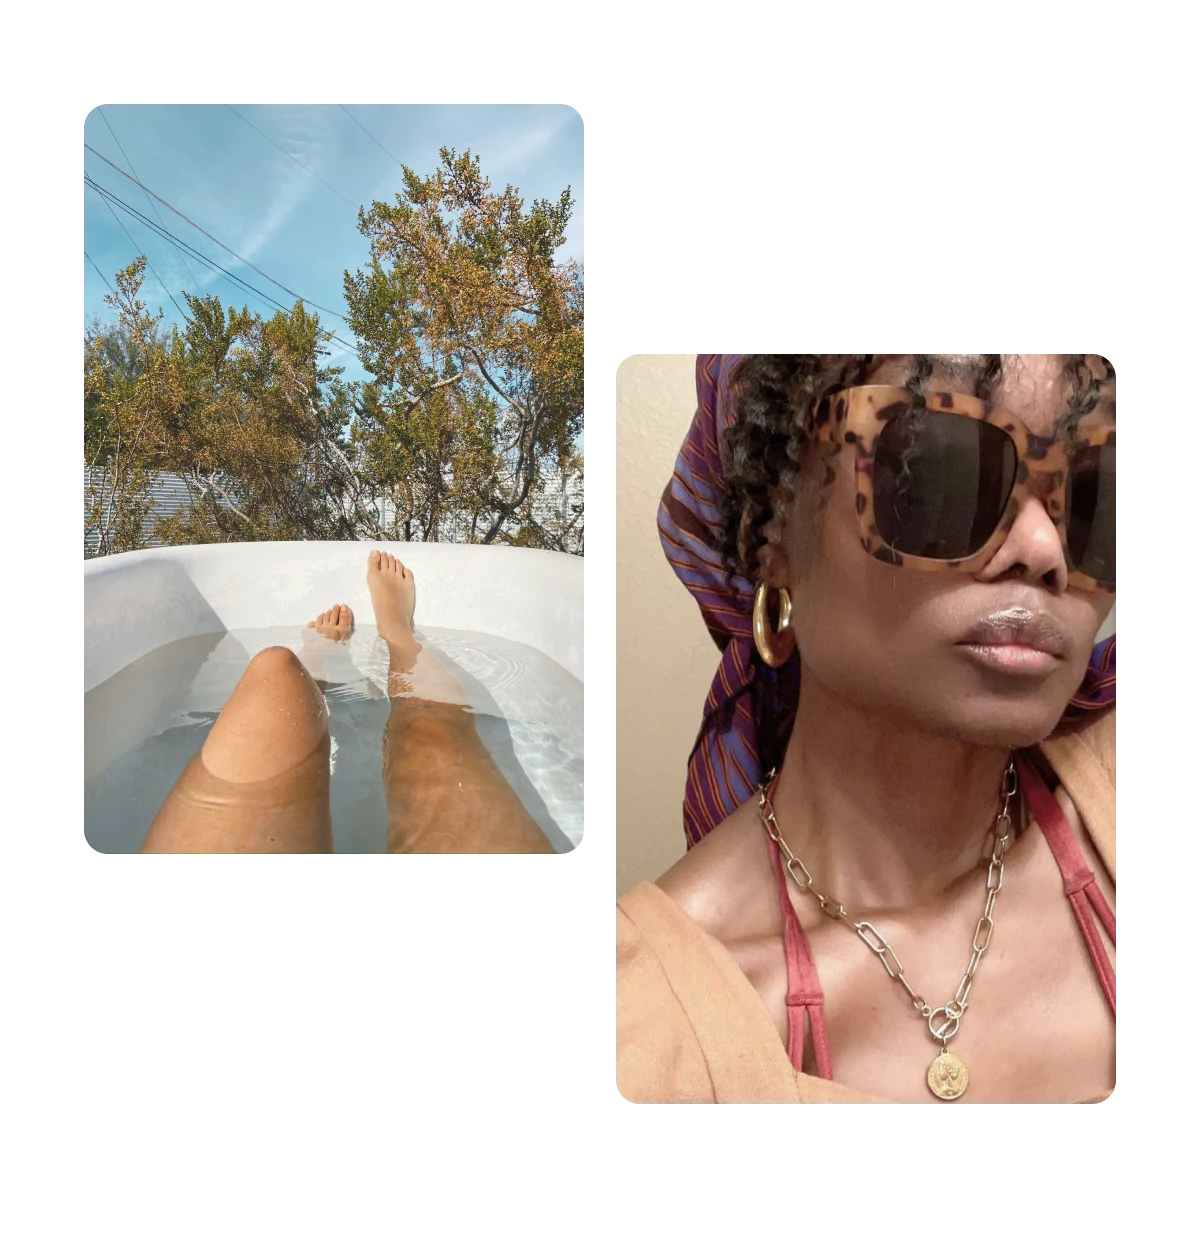 Two pins, legs in bath tub, black woman in sunglasses